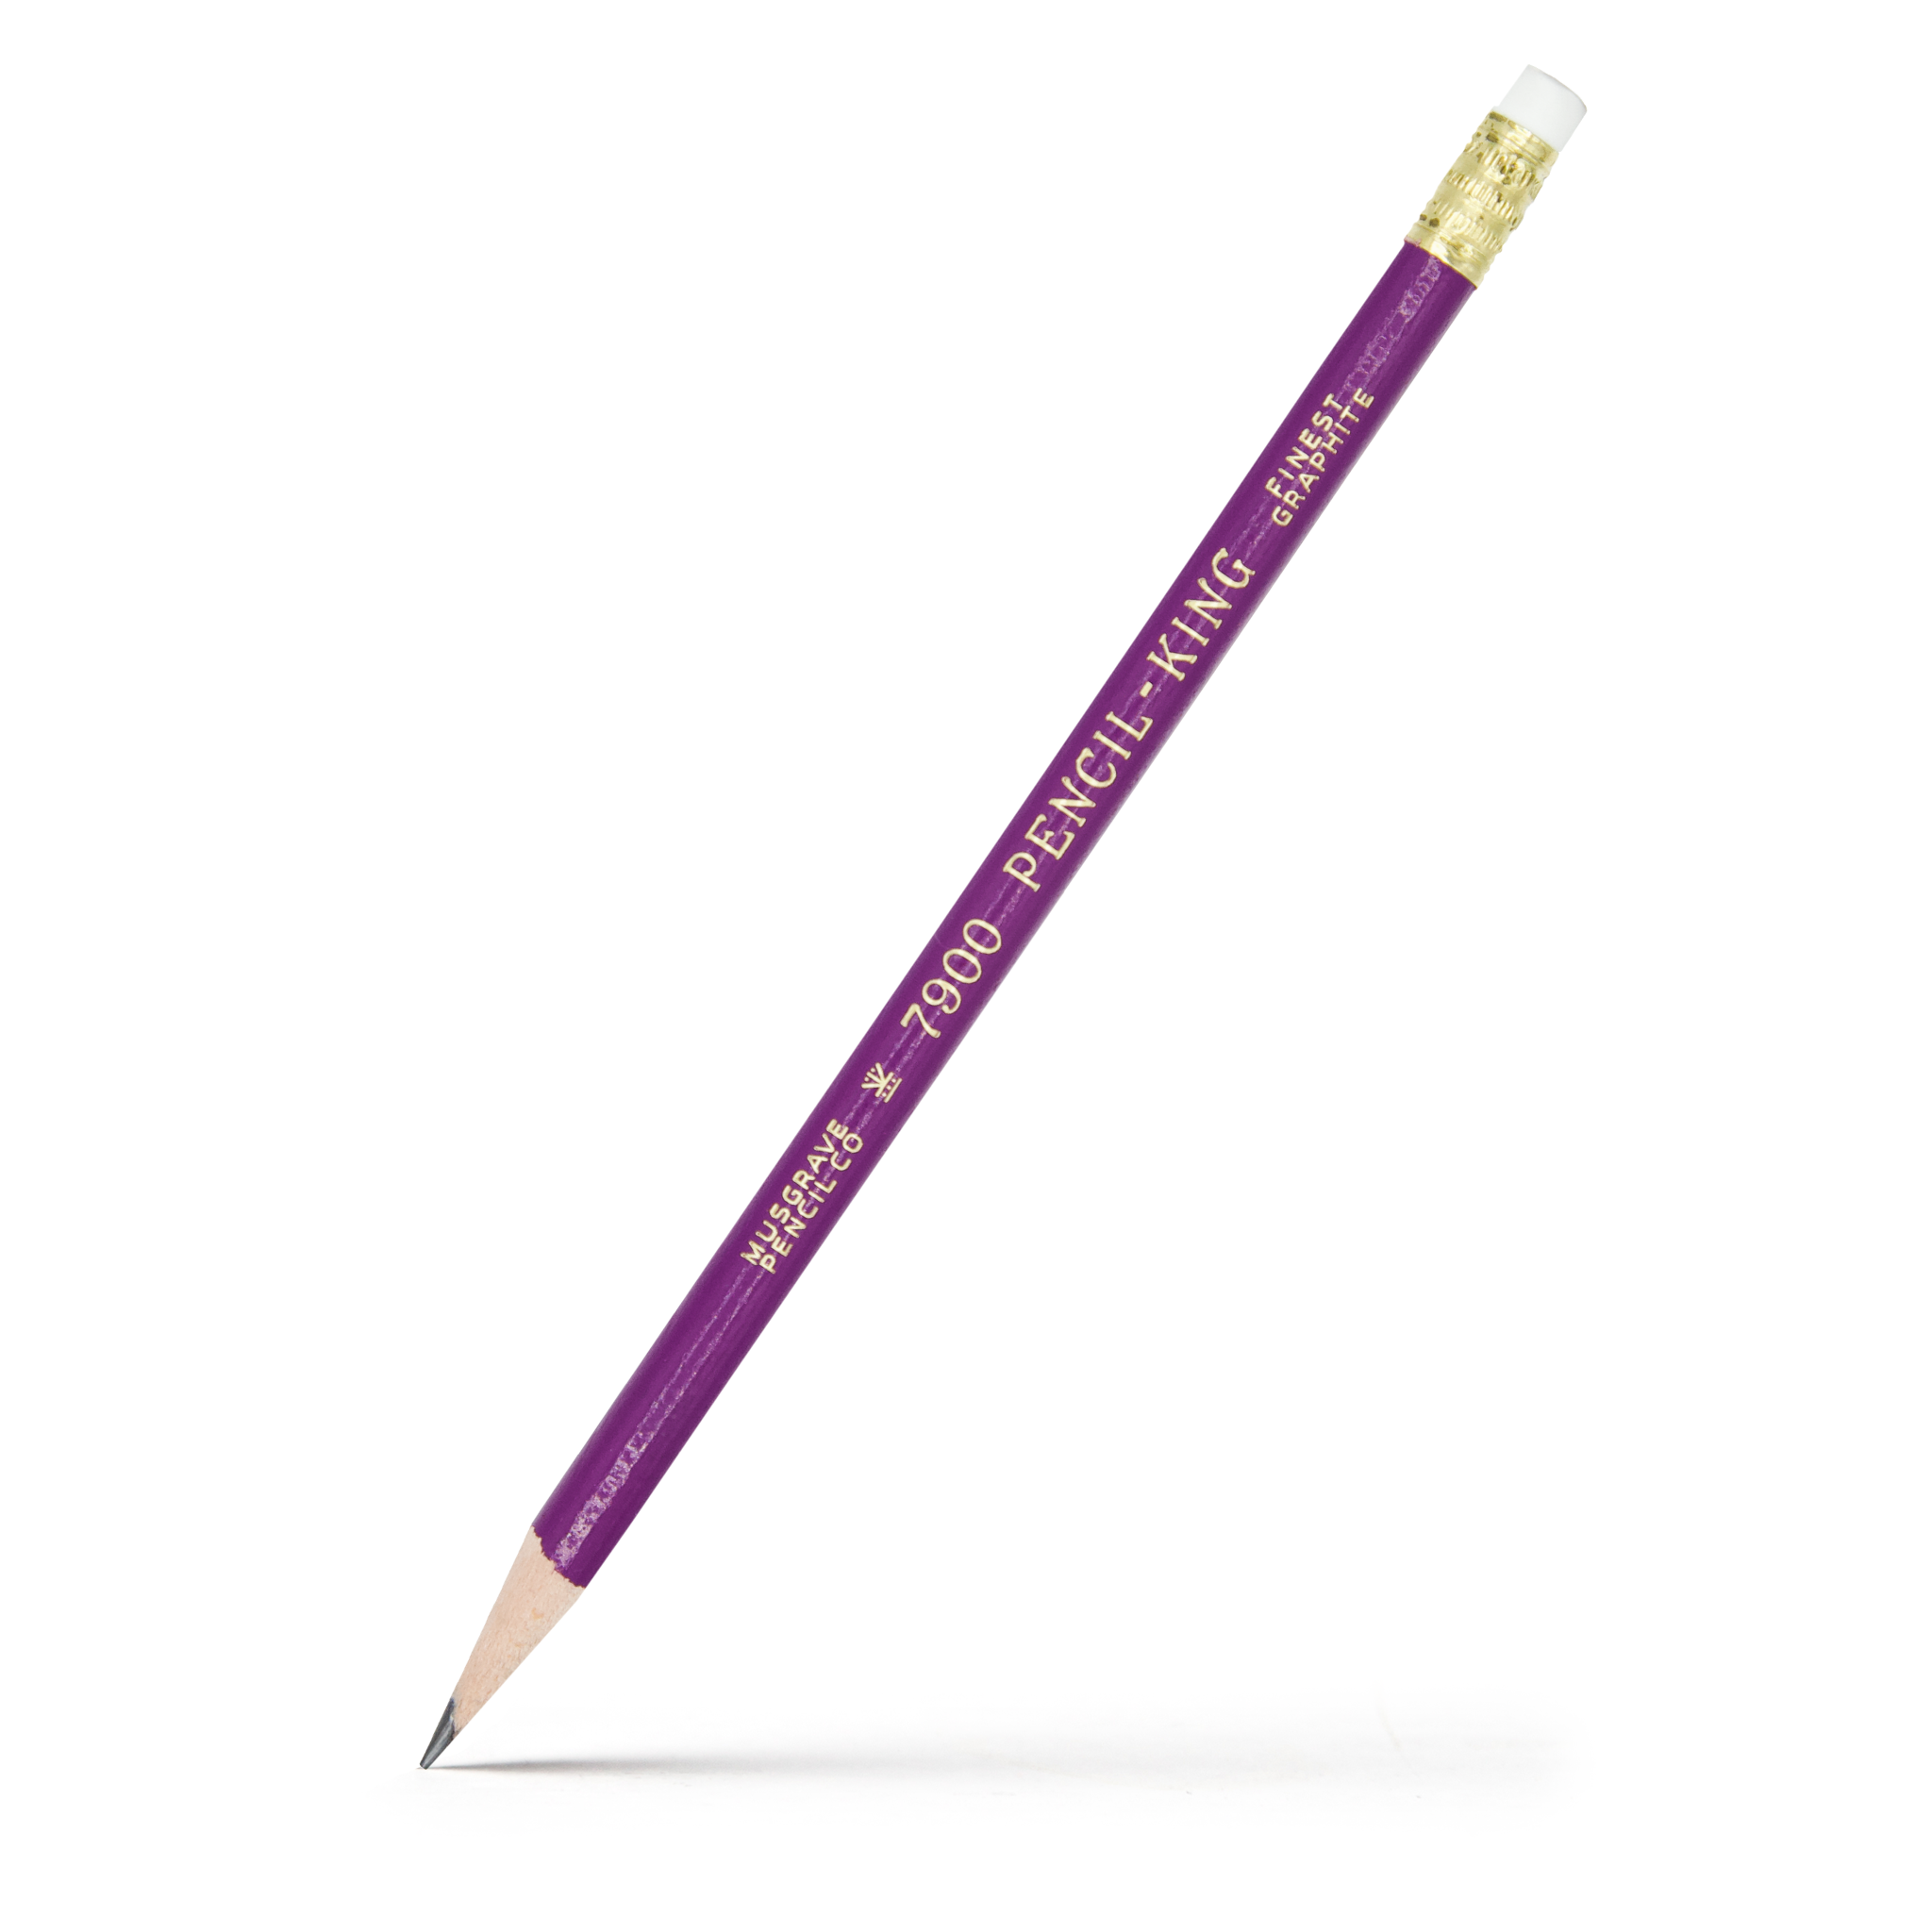 Which Metallic Pencils Should You Buy? Metallic Pencil Review 